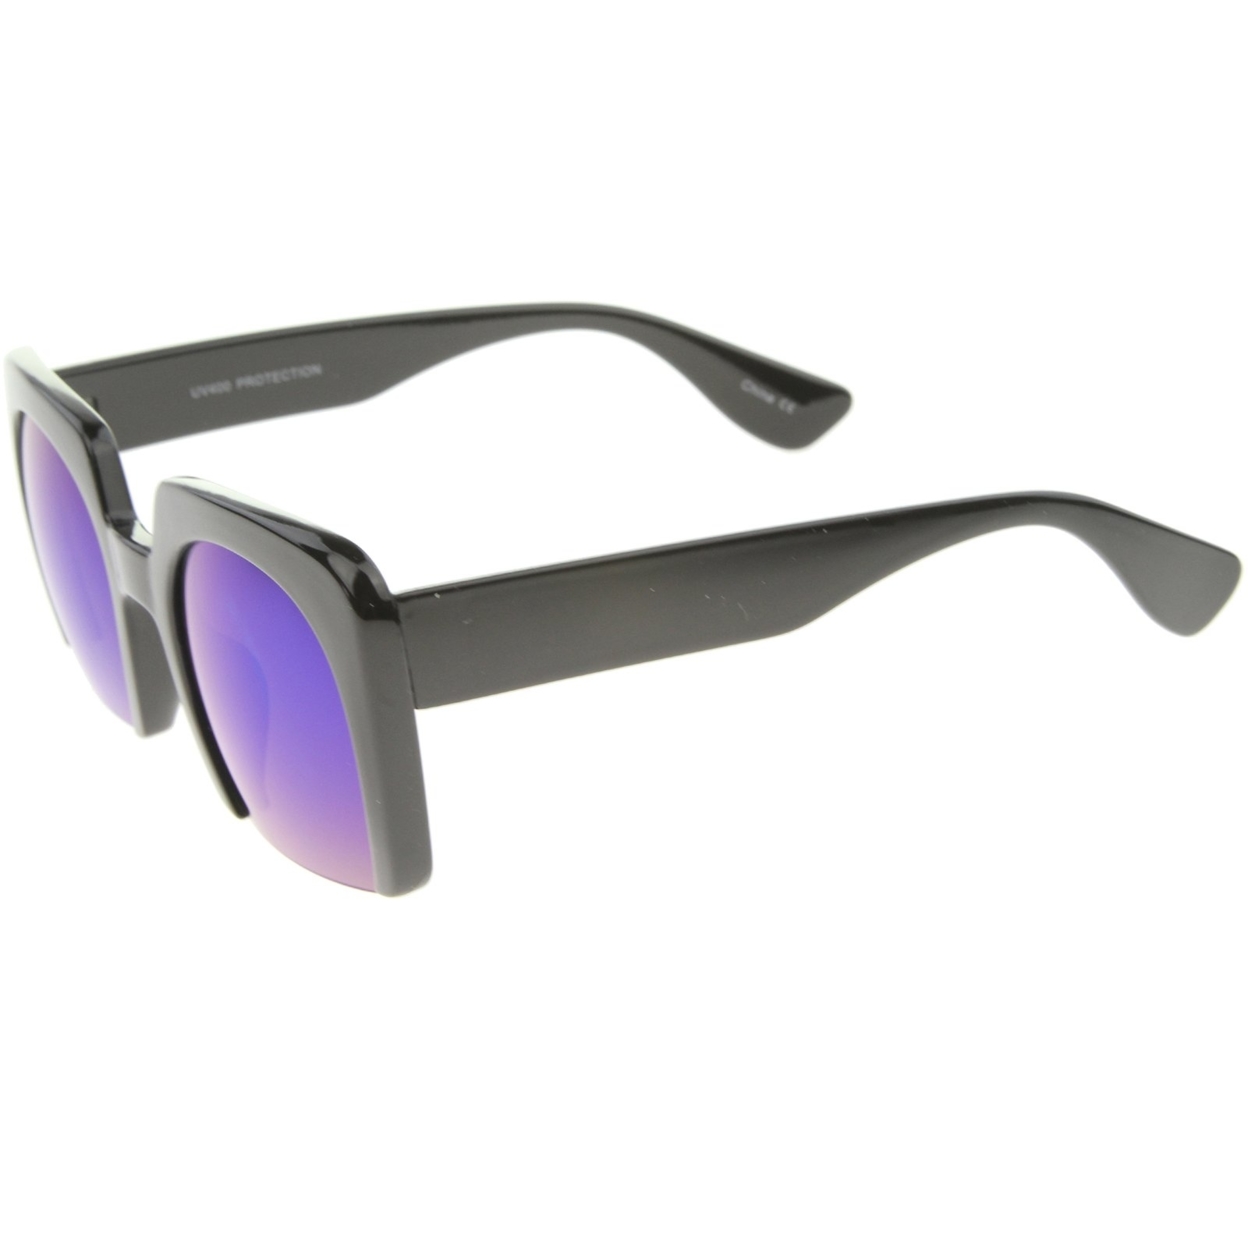 Women's High Fashion Bold Bottom Cut Square Mirrored Lens Sunglasses 52mm - Shiny Black / Pink Green Mirror